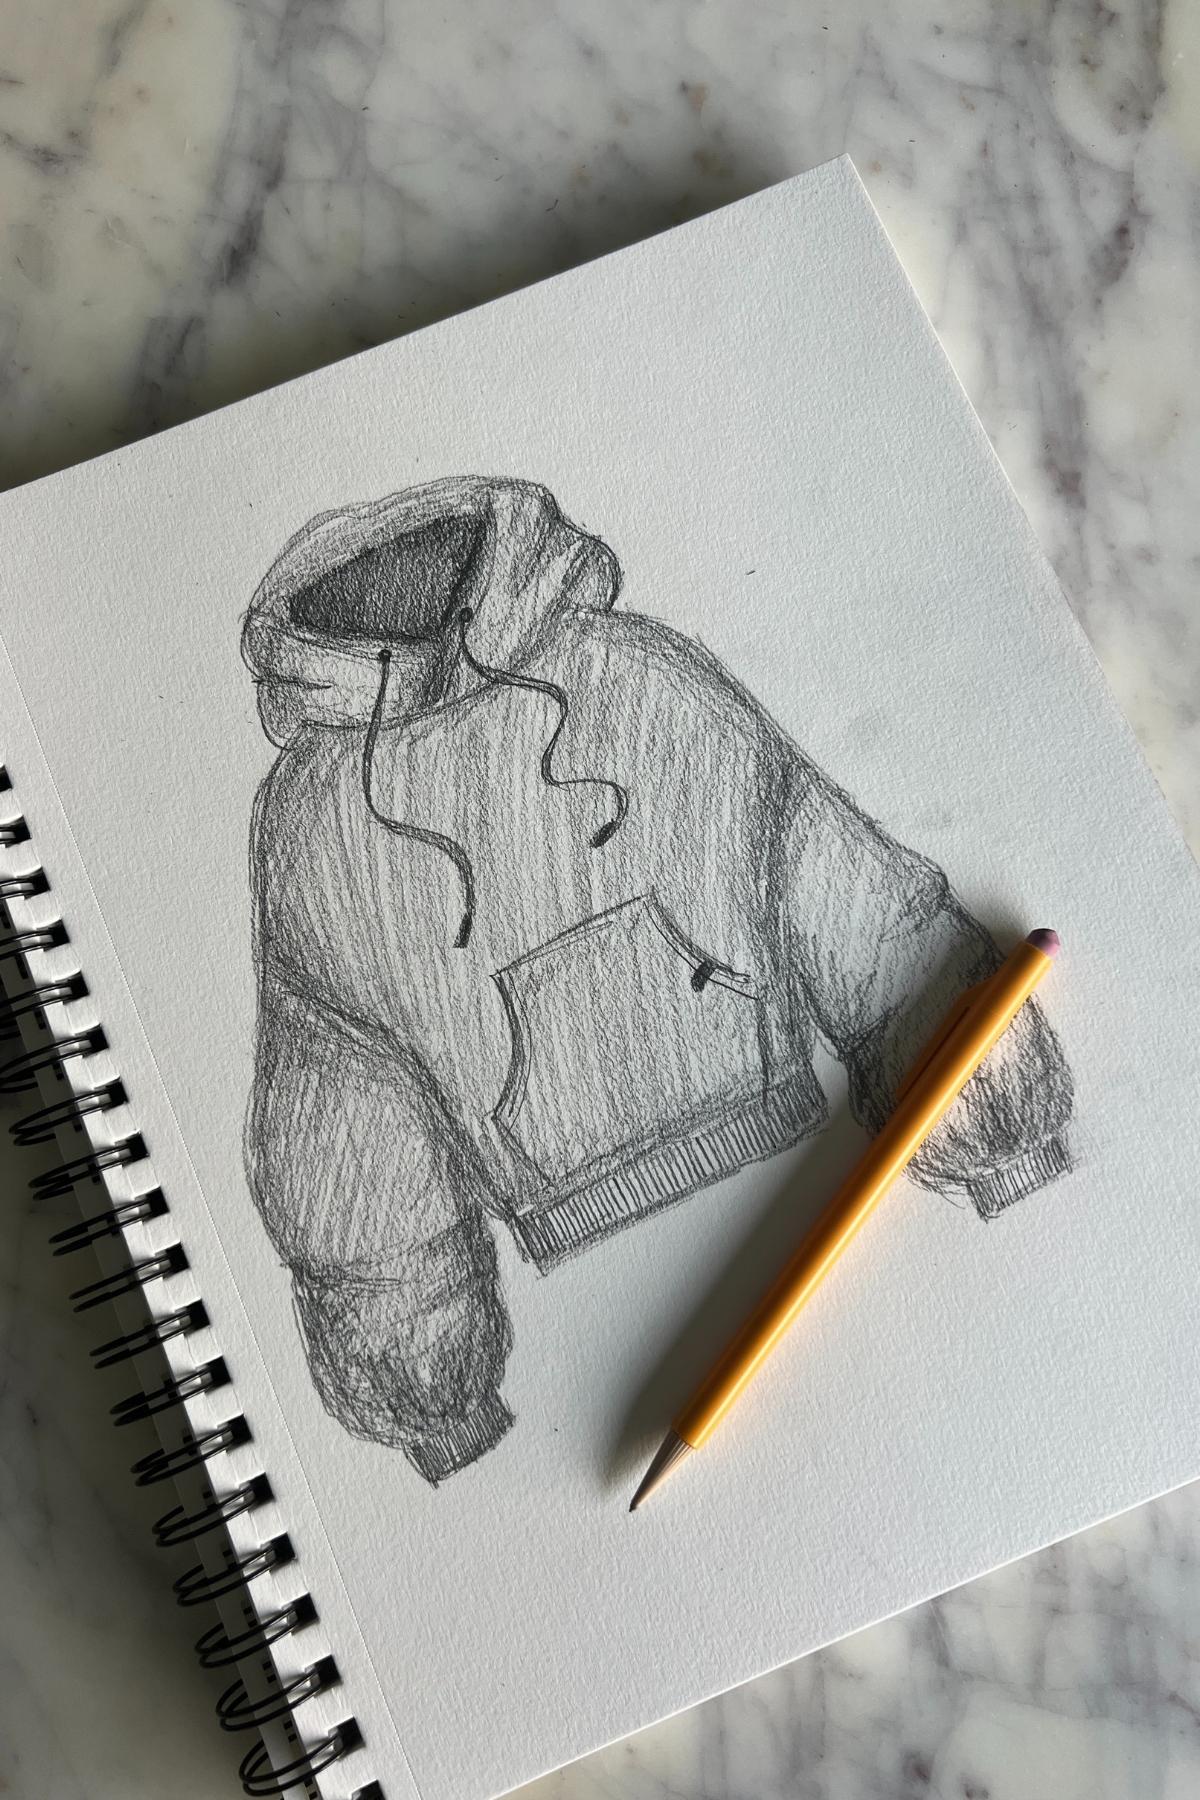 Cloud pullover hoodie sketch popflex